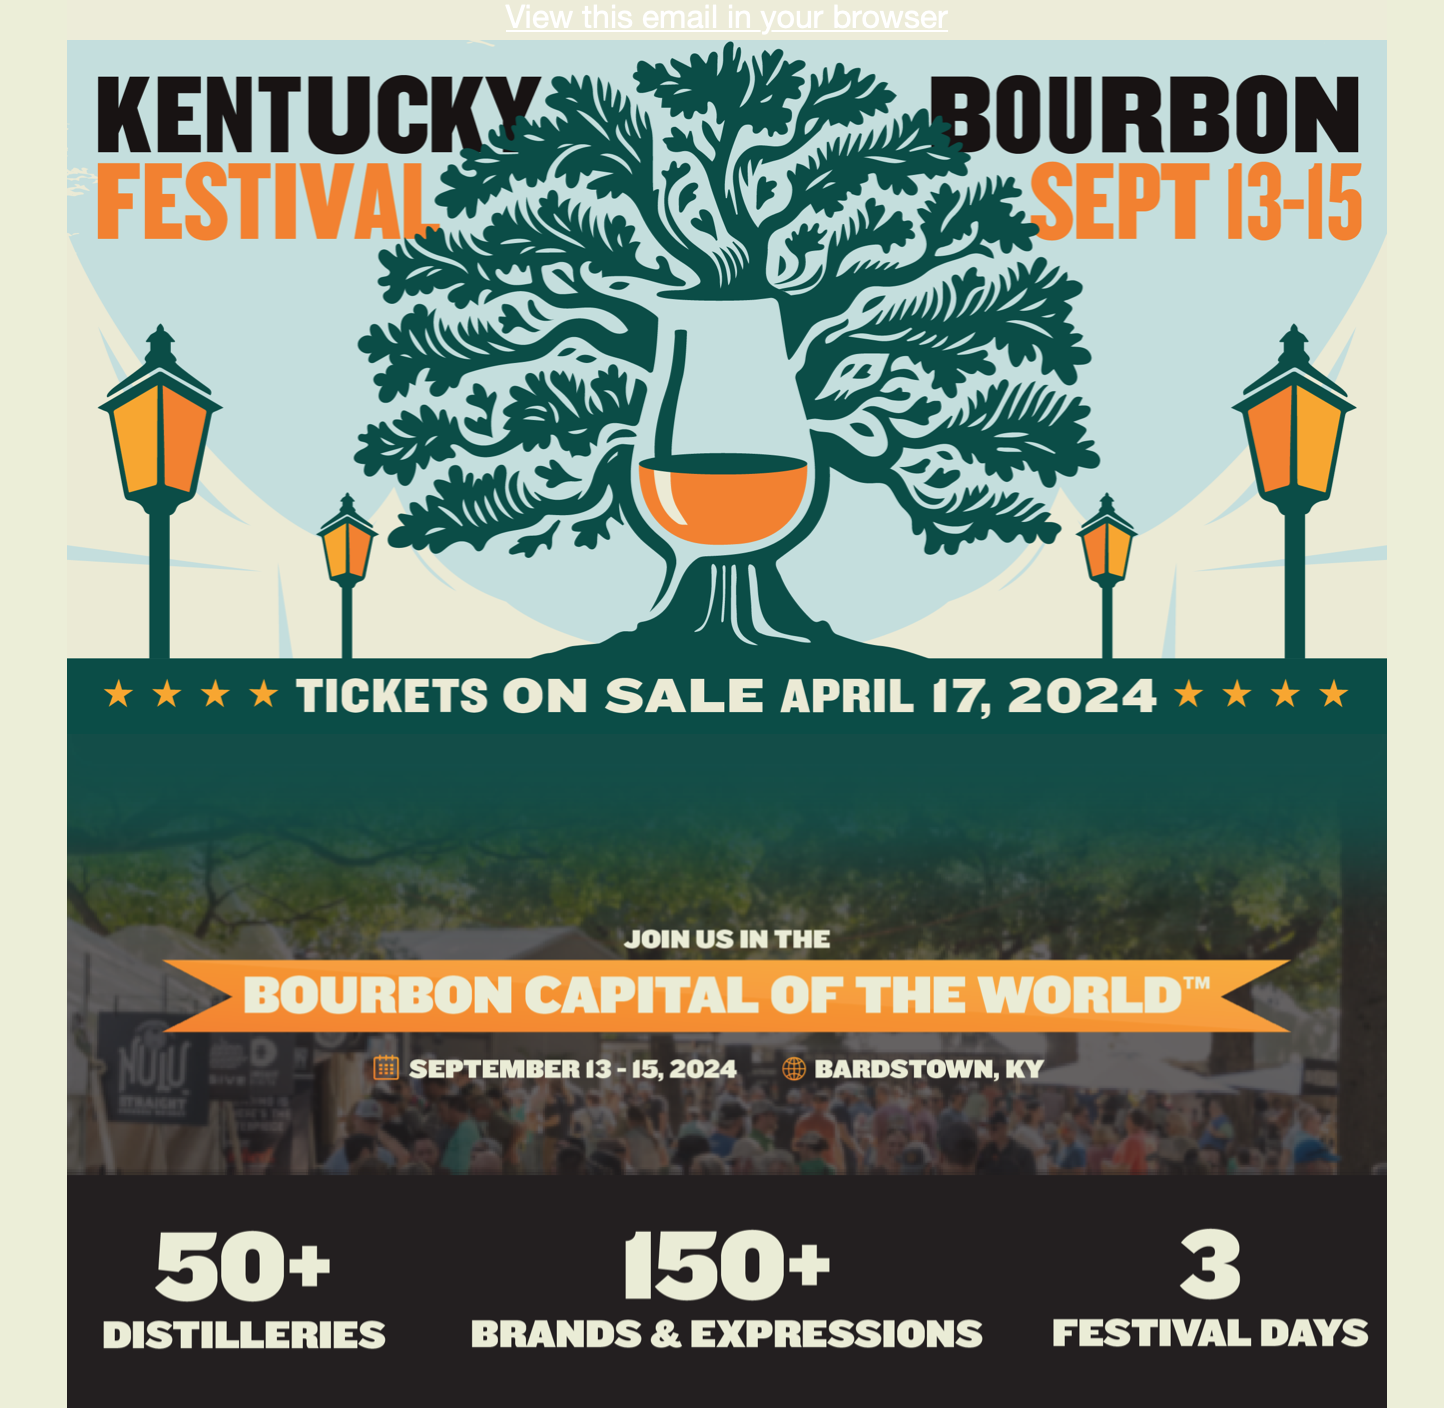 Kentucky Bourbon Festival Tickets On Sale April 17 Whiskey Network